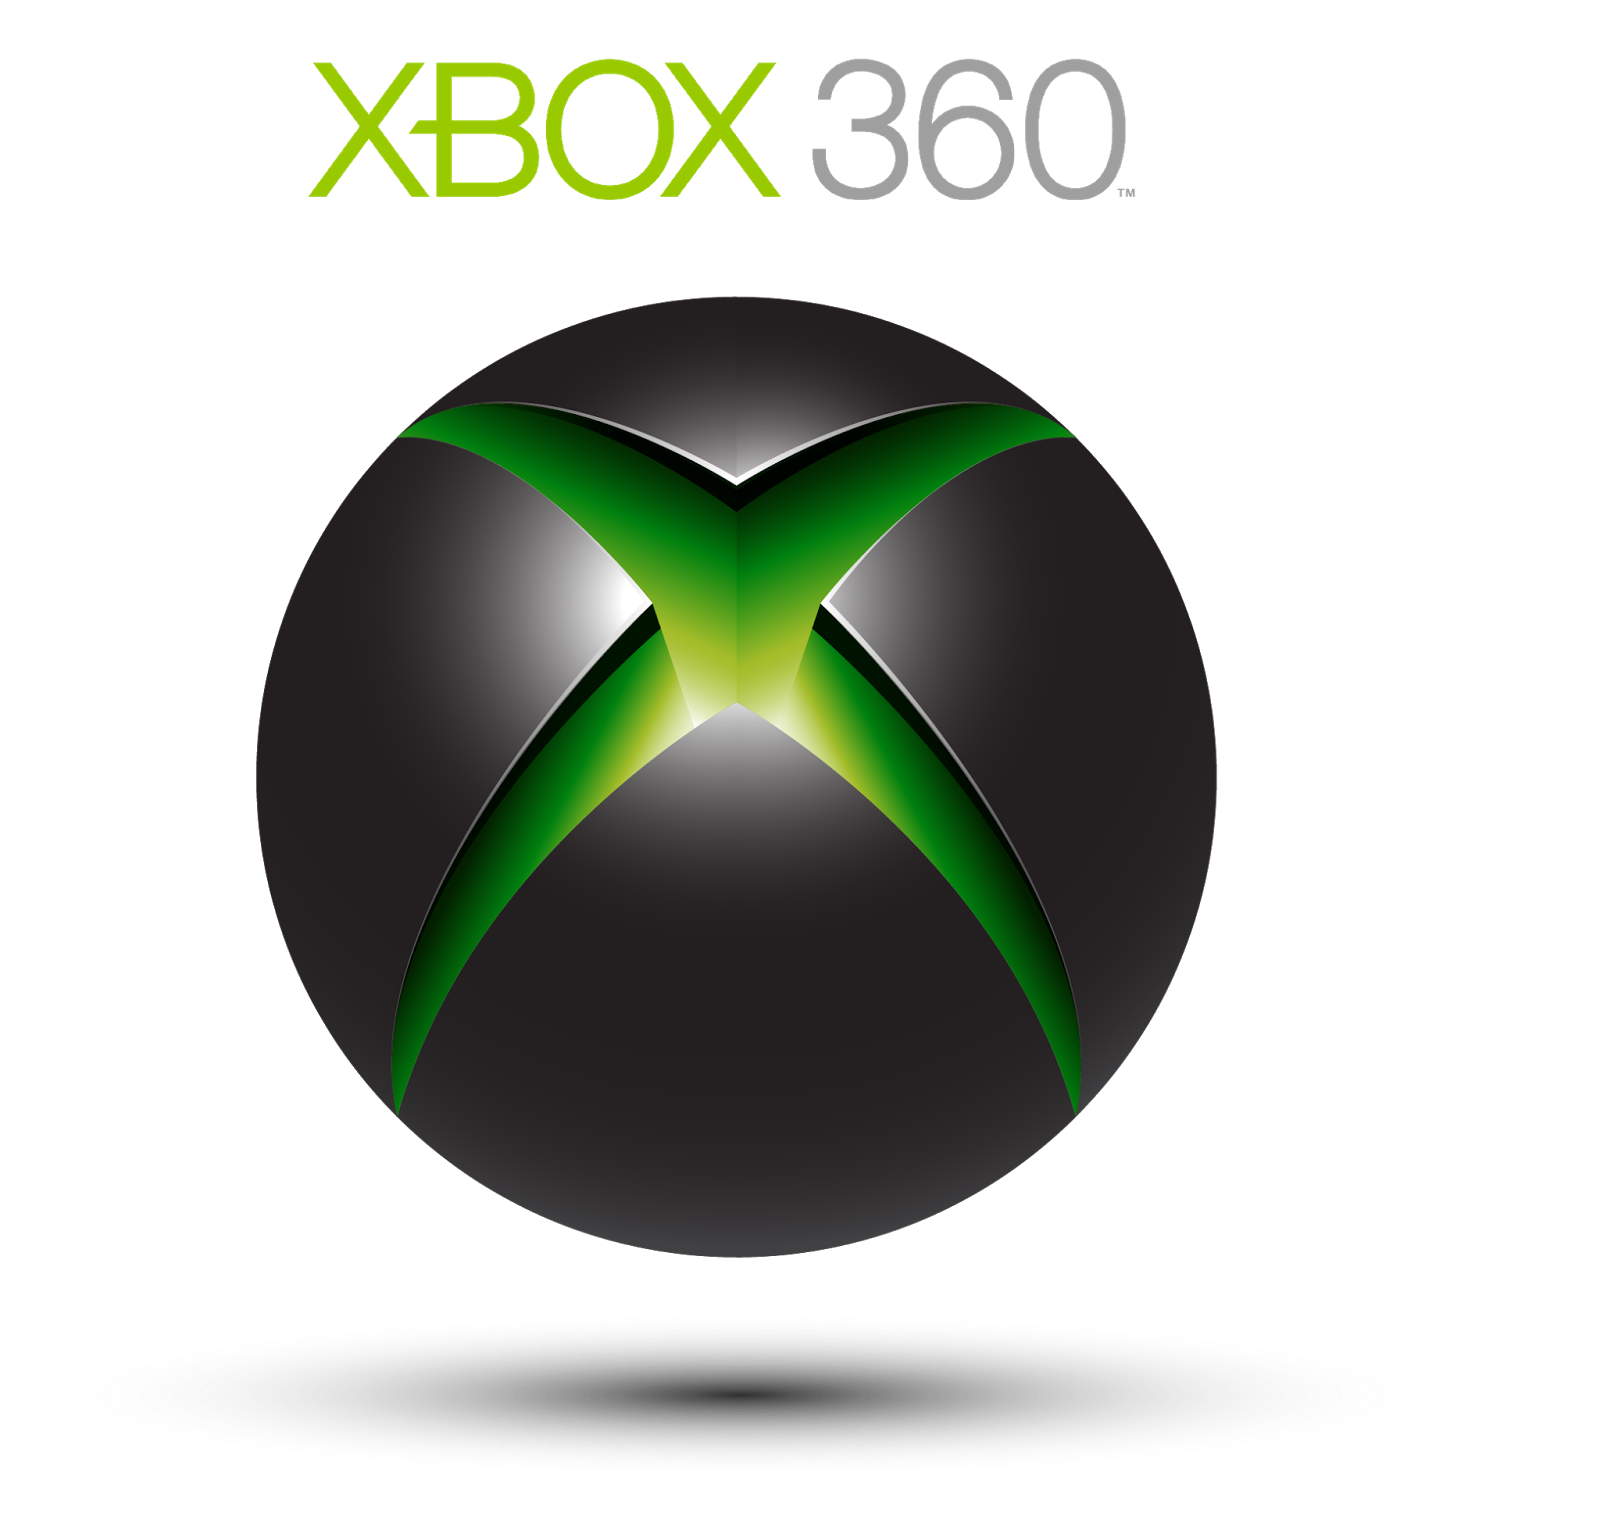 Xbox login. Xbox 360. Xbox 360 лого. Microsoft Xbox 360 logo. Икс бокс 360 значок.